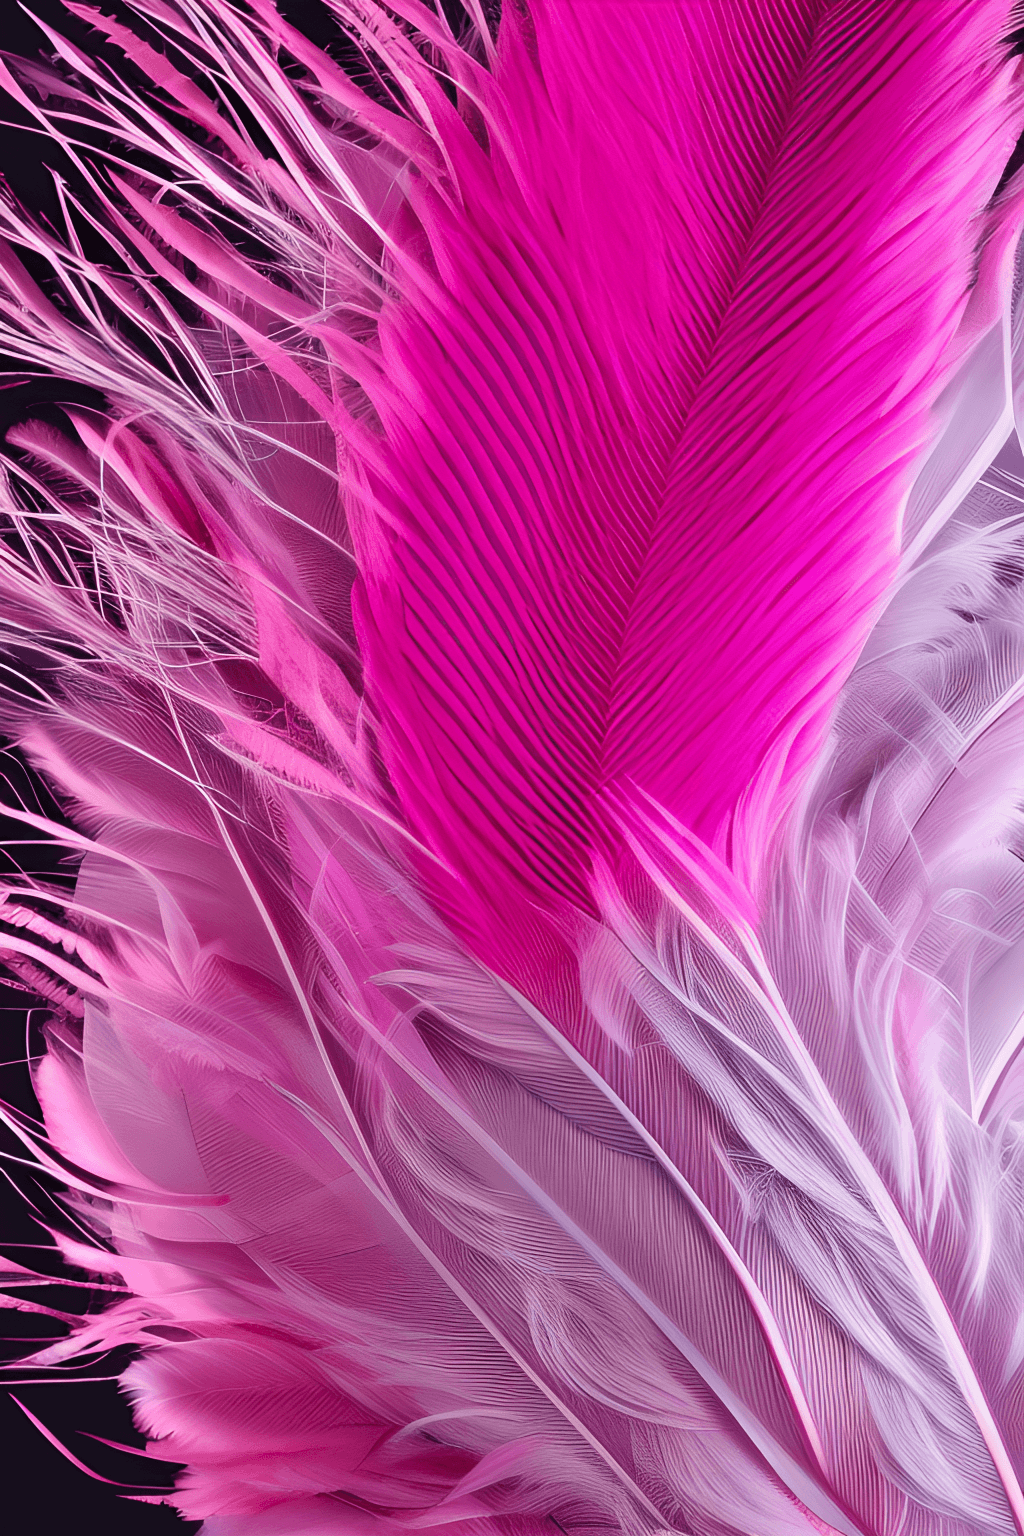 Piume rosa ordinate per display a colori · Creative Fabrica